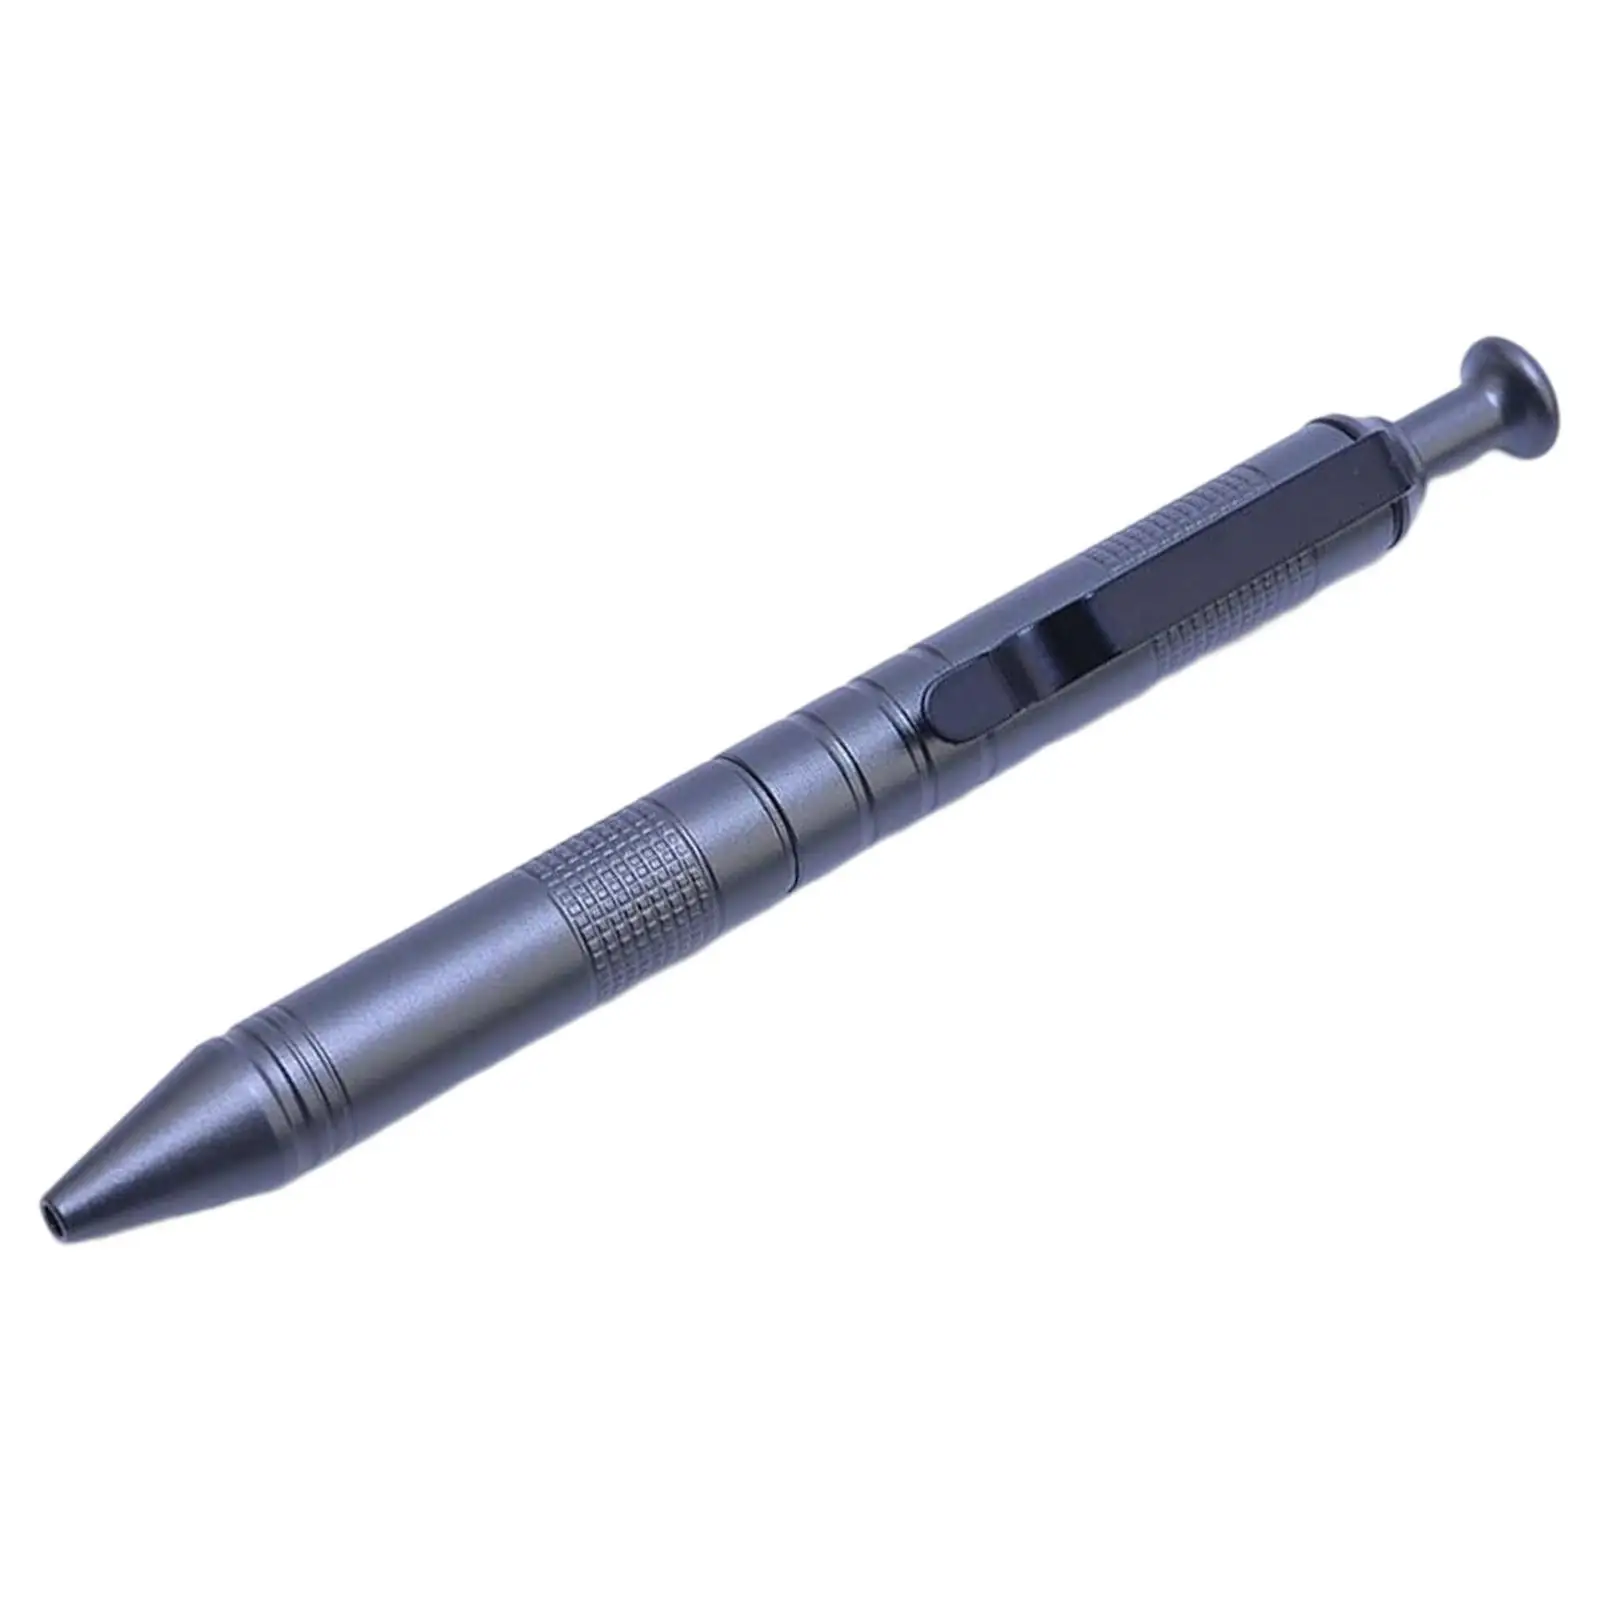 Sign pens Portable Pocket emergencies Camping Gear Glass Breaker Multitool Ballpoint Pen